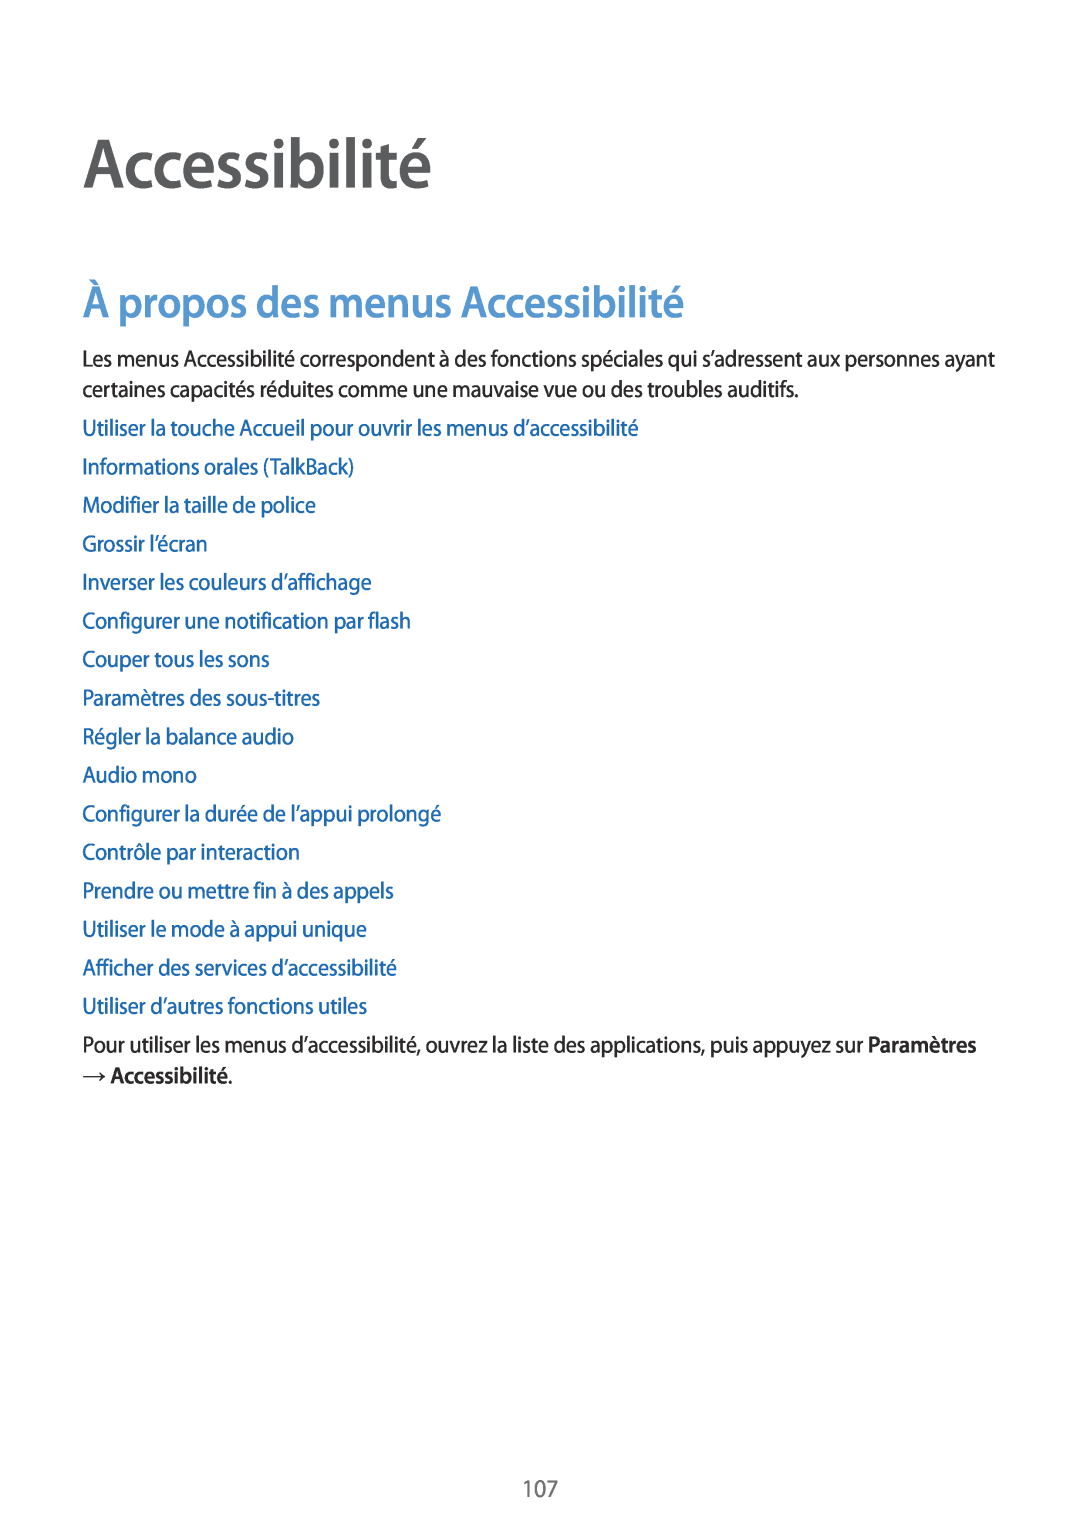 Samsung SM-G357FZAZXEF, SM-G357FZAZSFR, SM-G357FZWZBOG, SM-G357FZWZXEF À propos des menus Accessibilité, → Accessibilité 